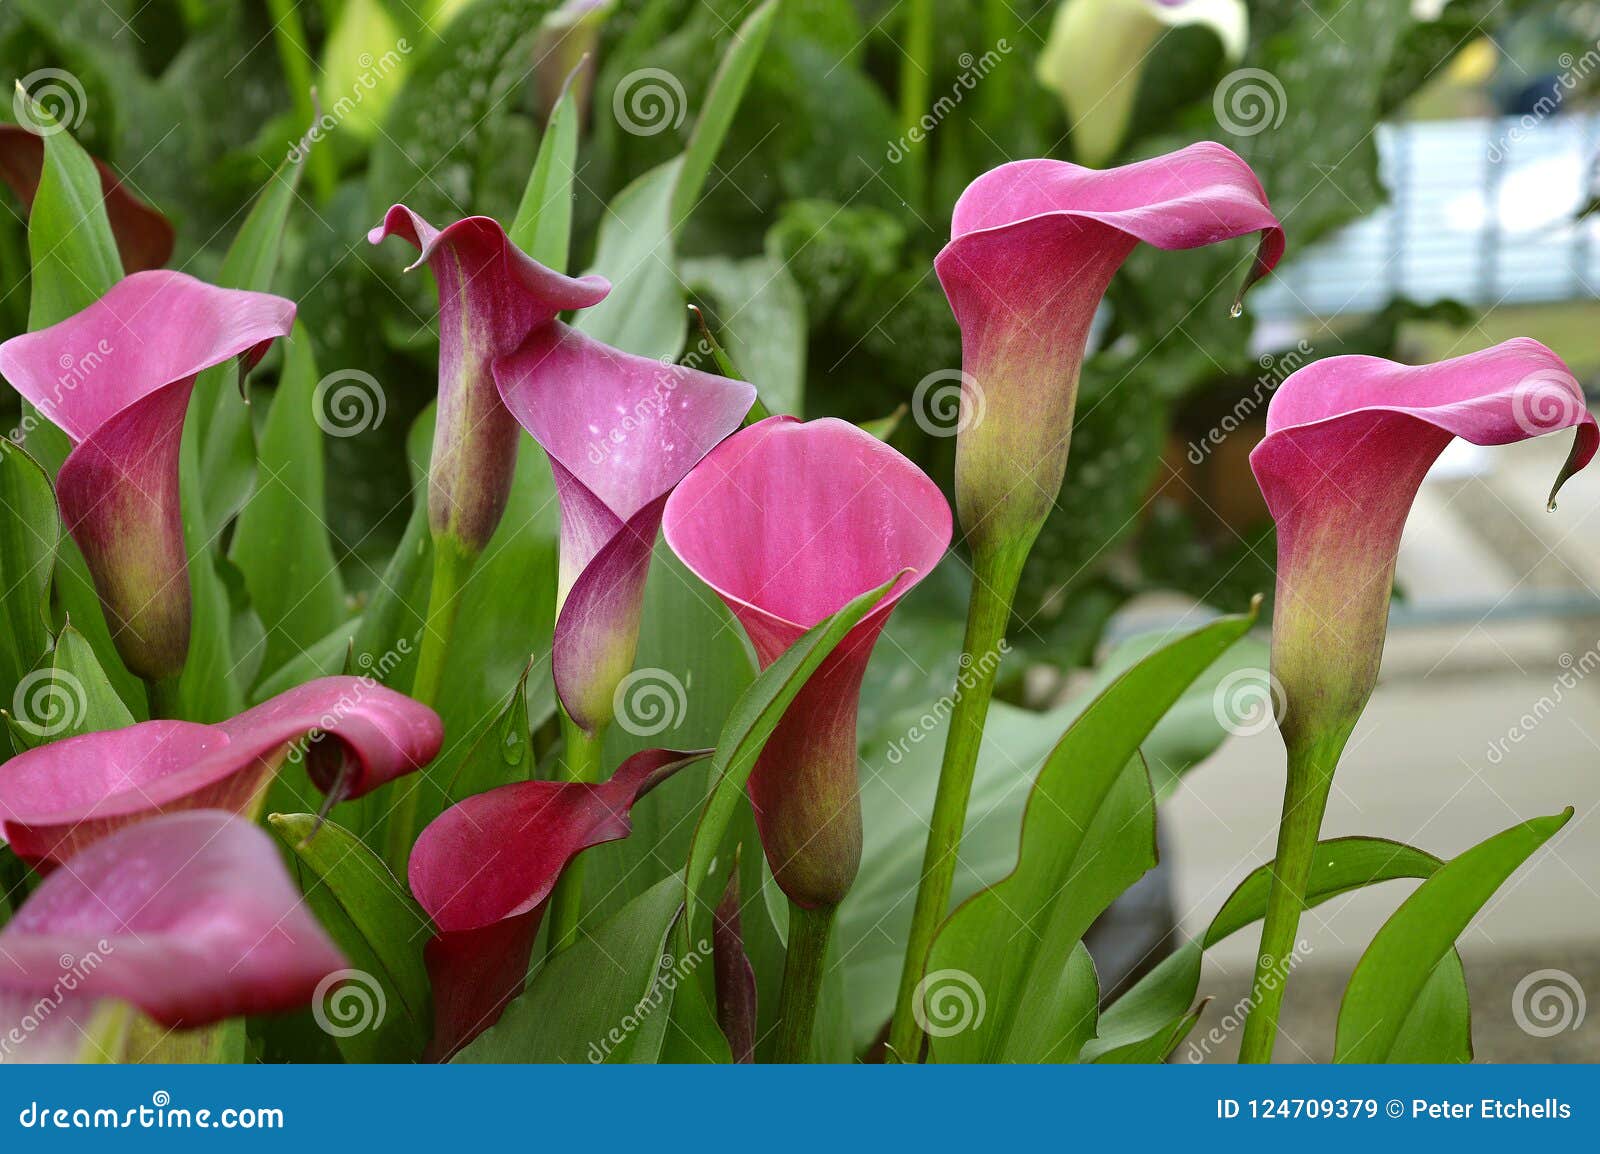 Zantedeschia Sumatra Flowers Stock Image - Image of angiosperms ...